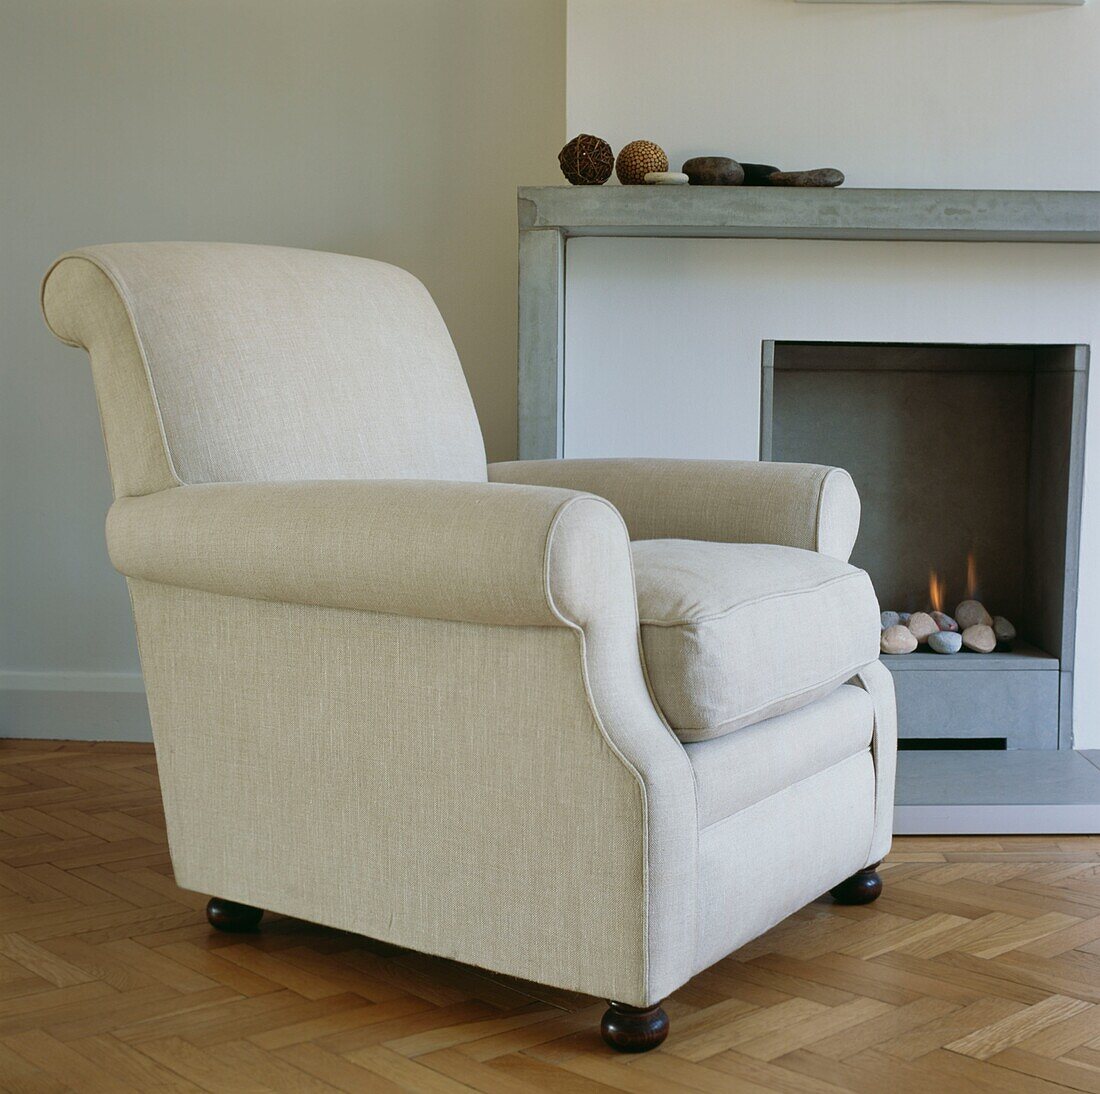 Cream upholstered armchair beside modern fireplace